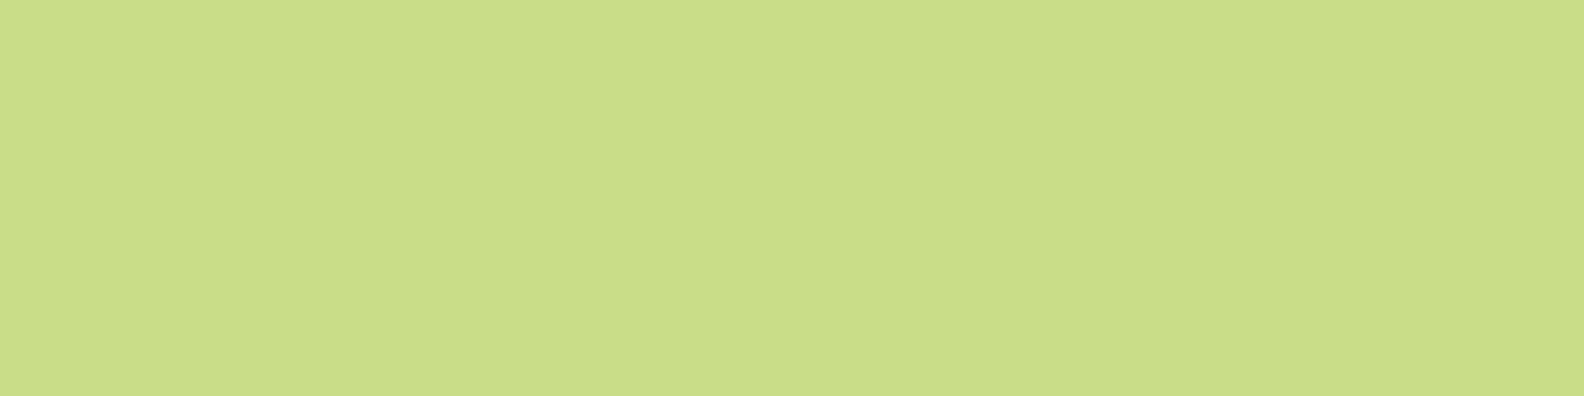 1584x396 Medium Spring Bud Solid Color Background